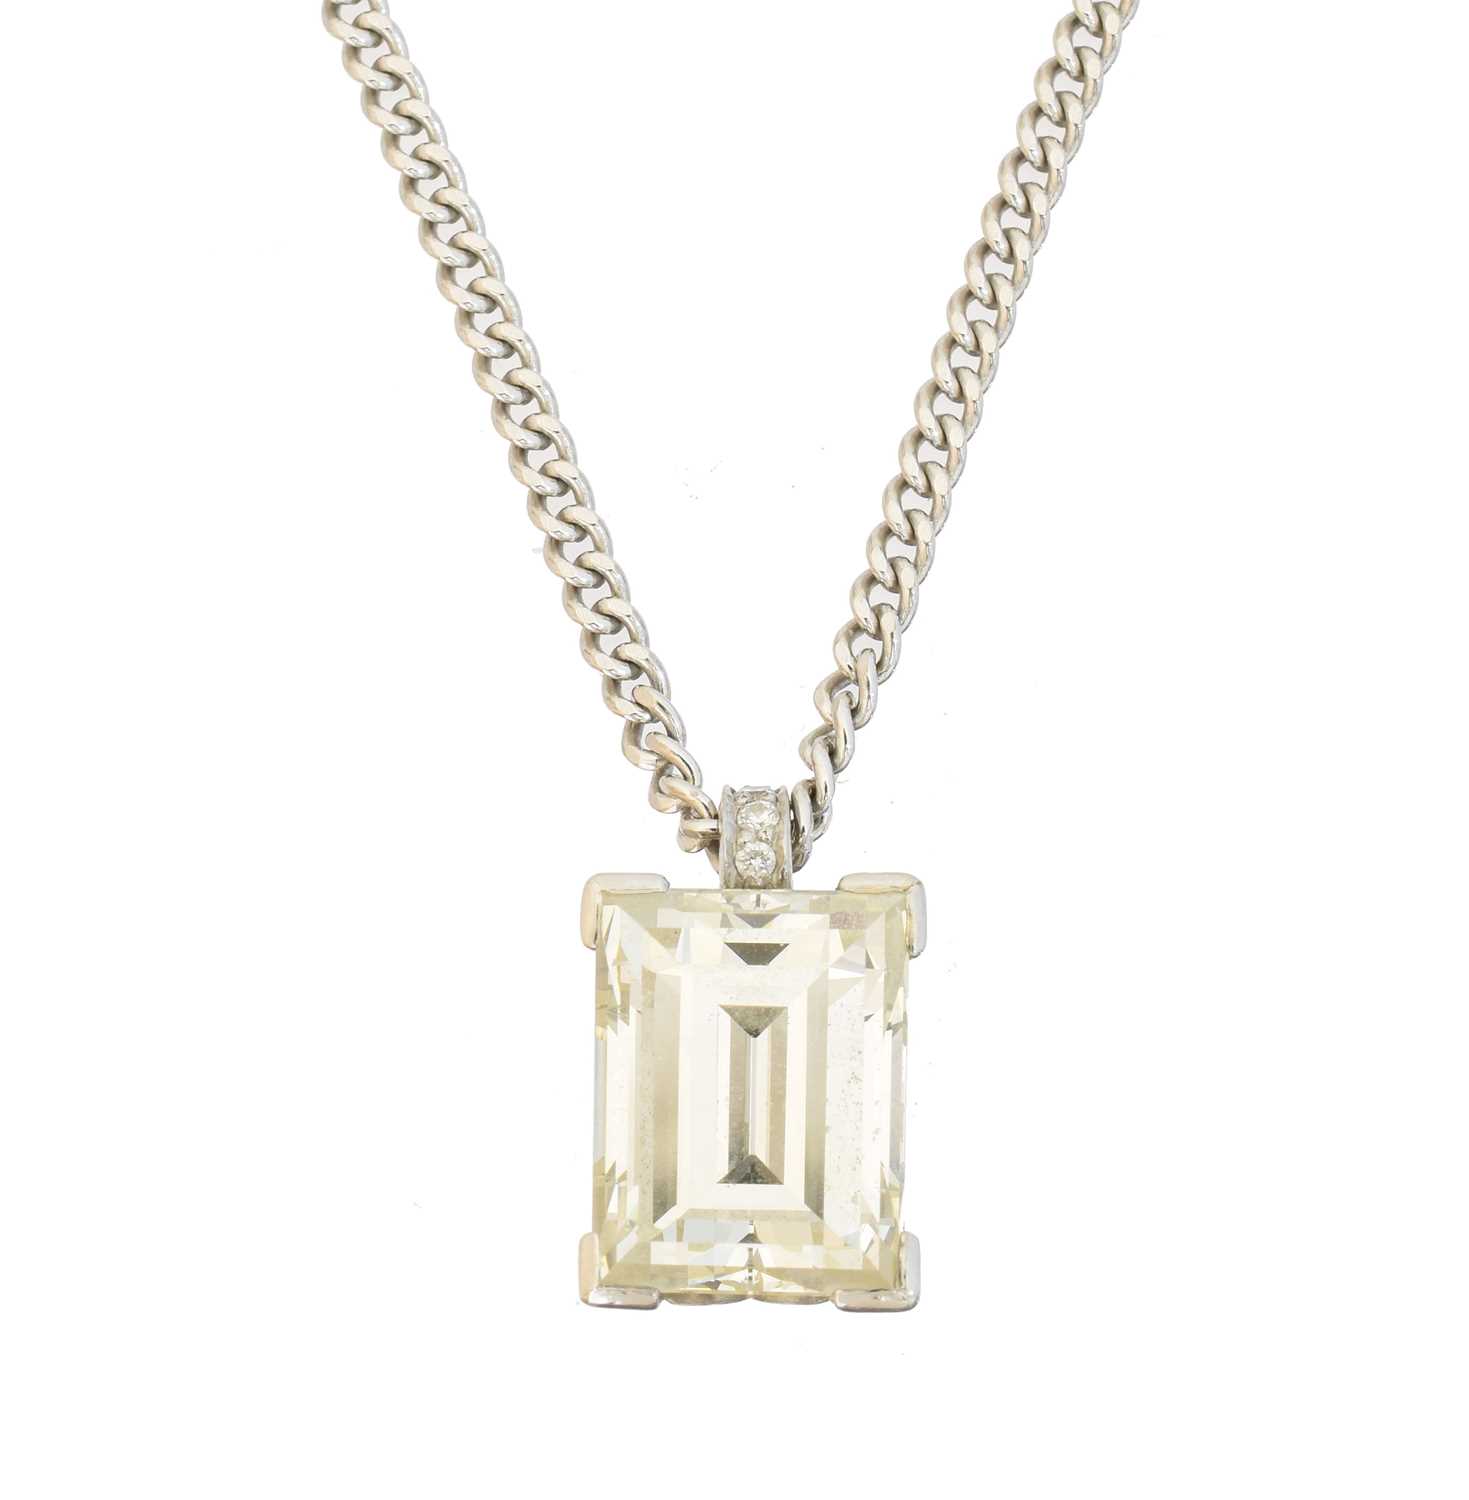 21 - An impressive diamond pendant,